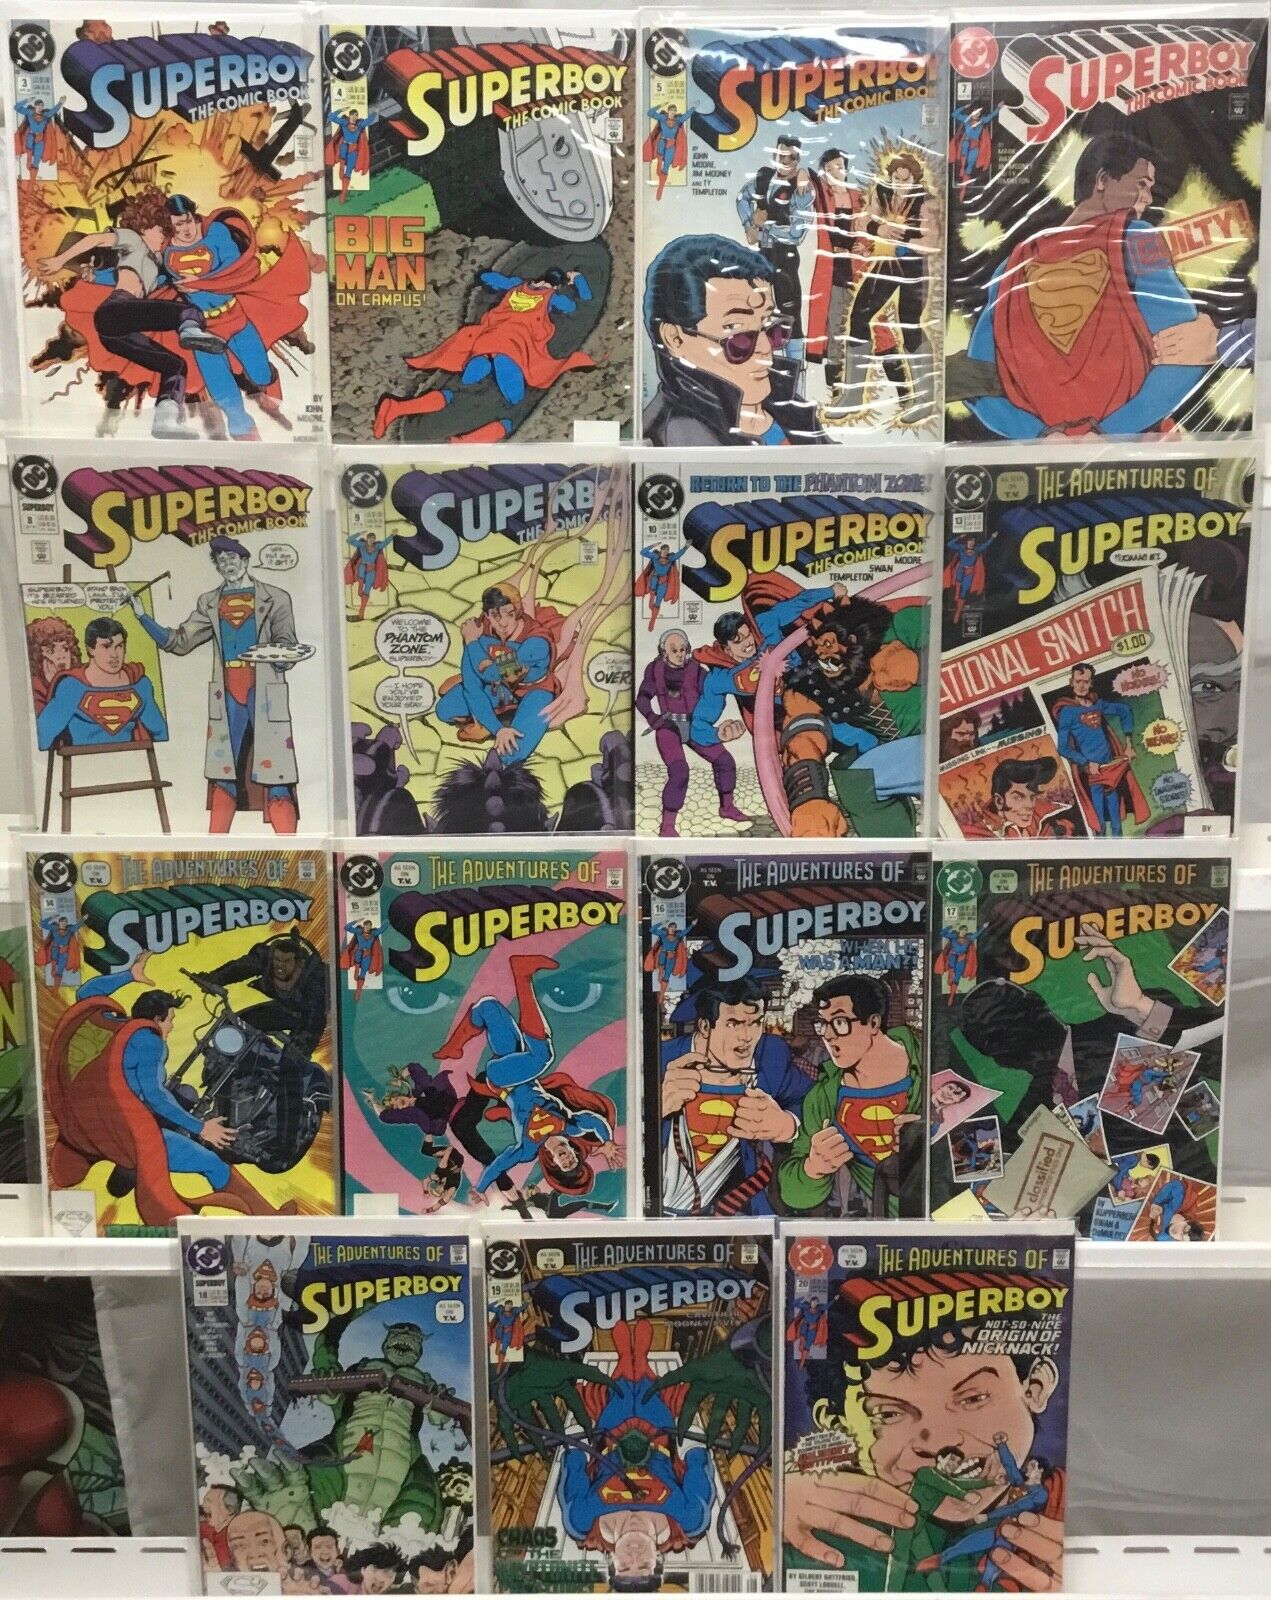 DC Comics - Superboy Volume 2 - Comic Book Lot of 15 Issues